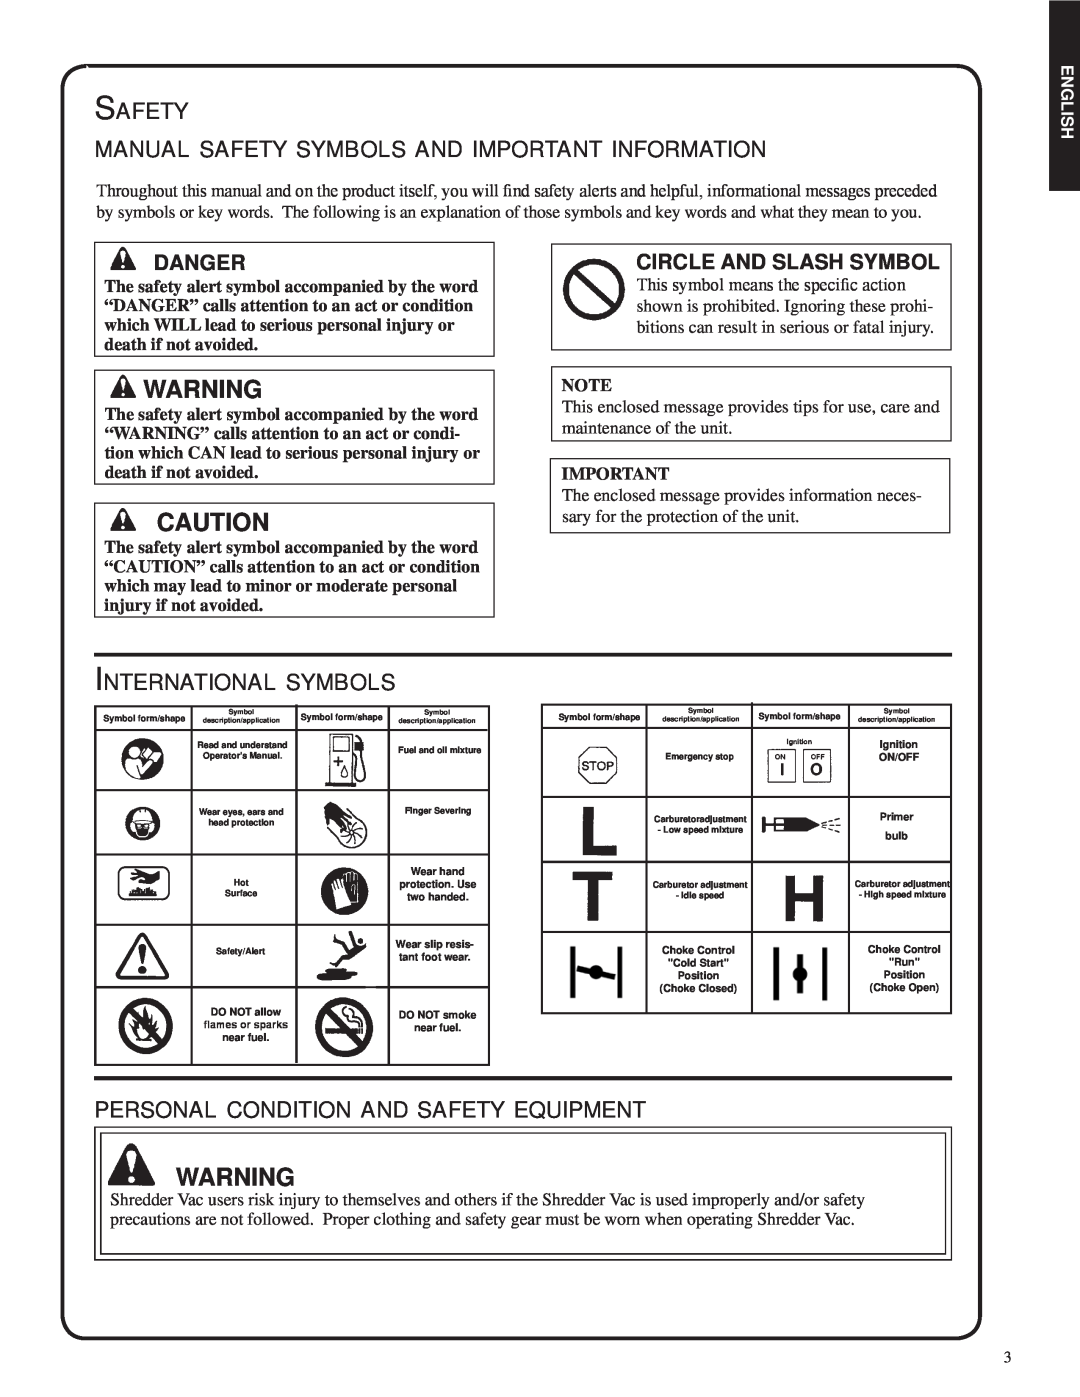 Shindaiwa 82052, SV212 Safety, manual safety symbols and important information, International symbols, Danger, English 